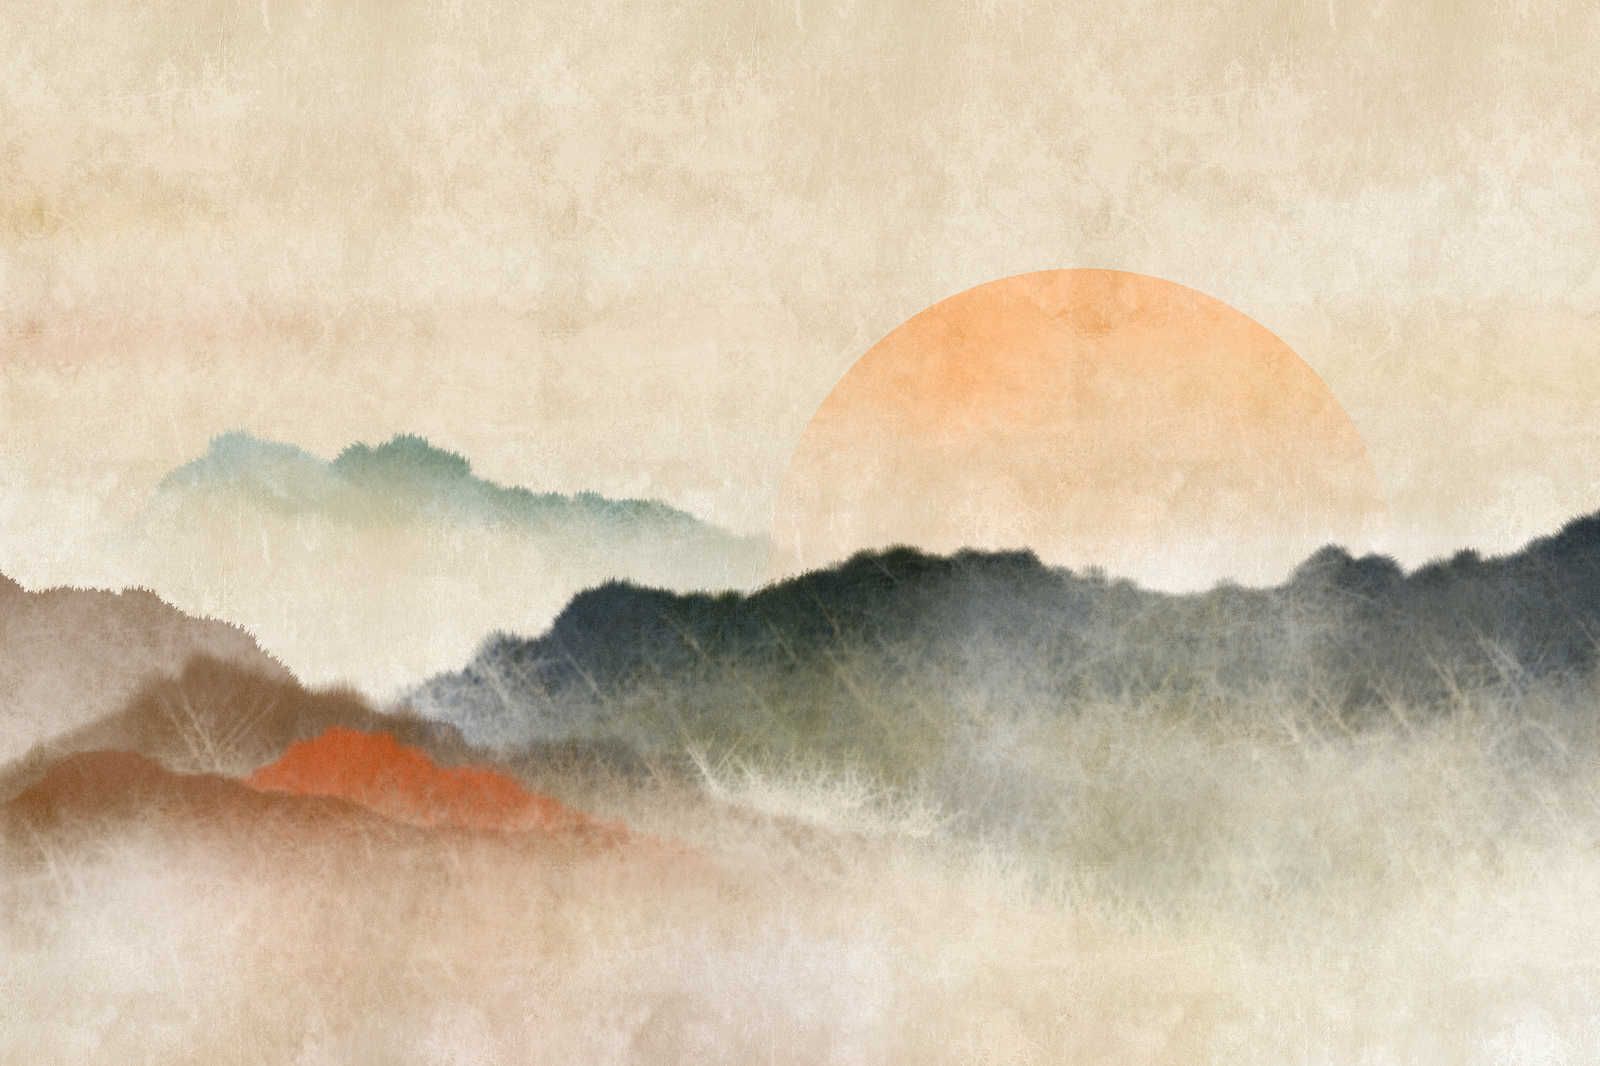             Akaishi 3 - Leinwandbild Sonnenaufgang, Kunstdruck im Asia Style – 0,90 m x 0,60 m
        